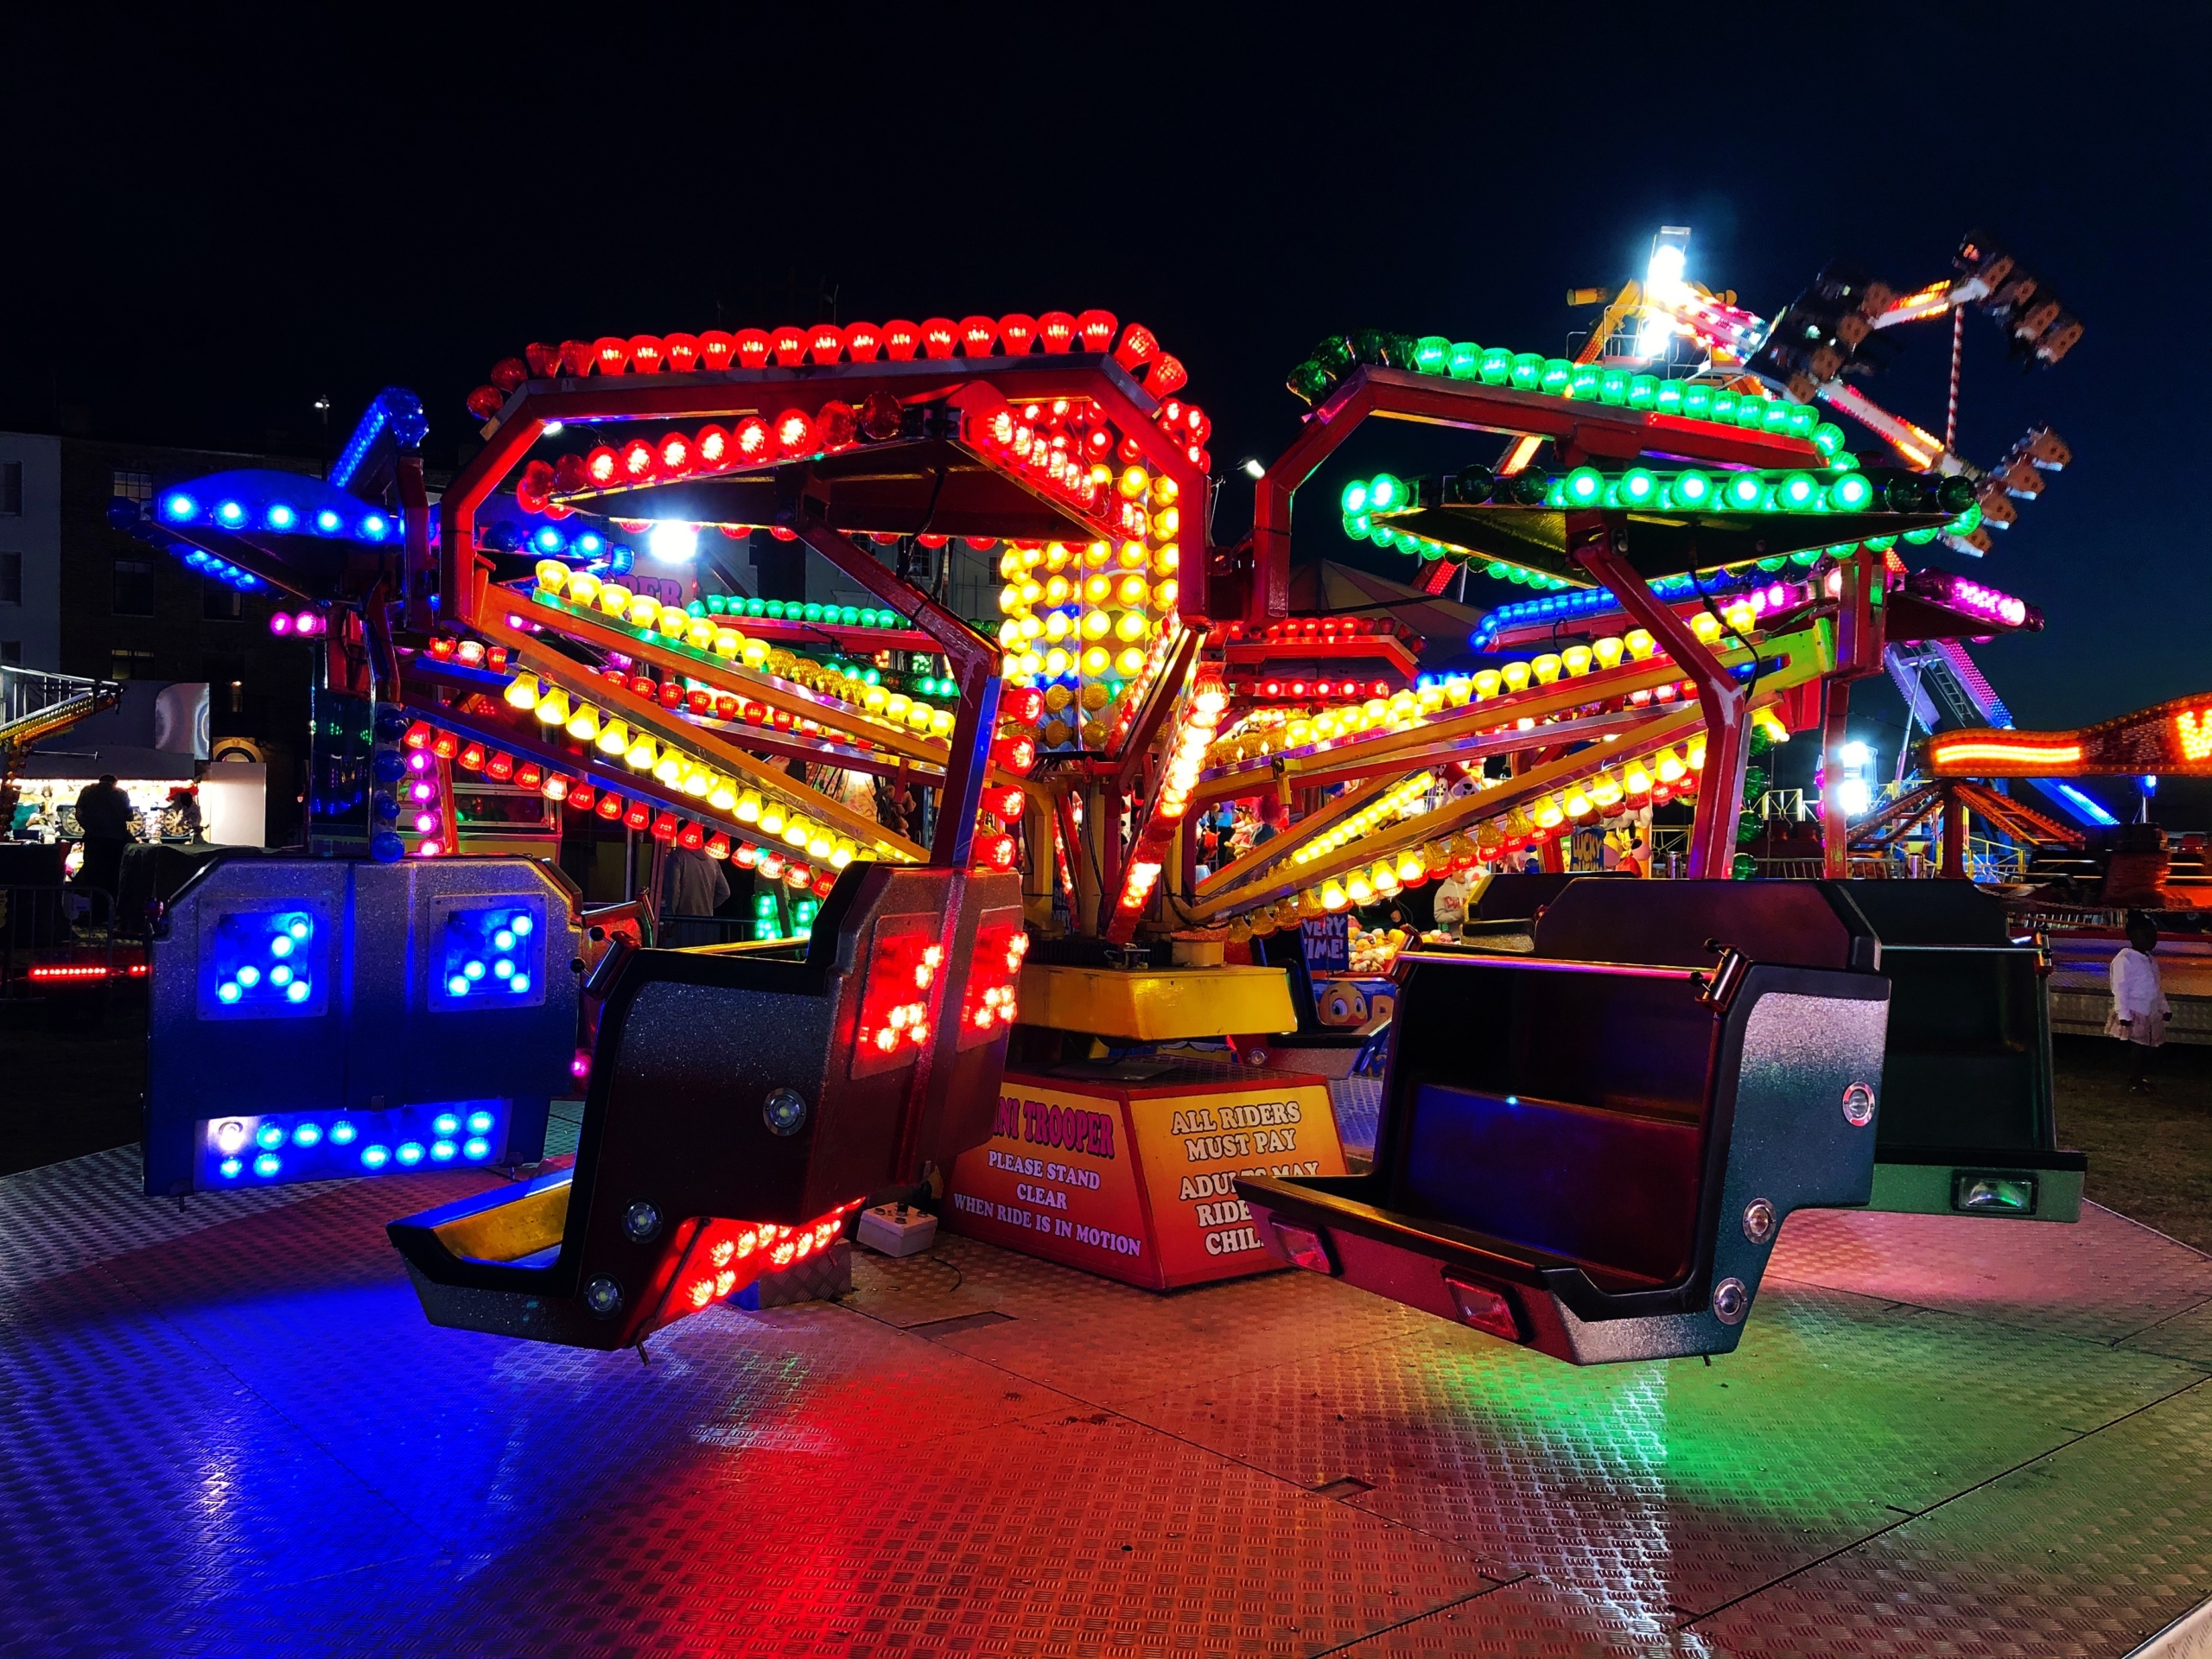 fairground at night with neon lights